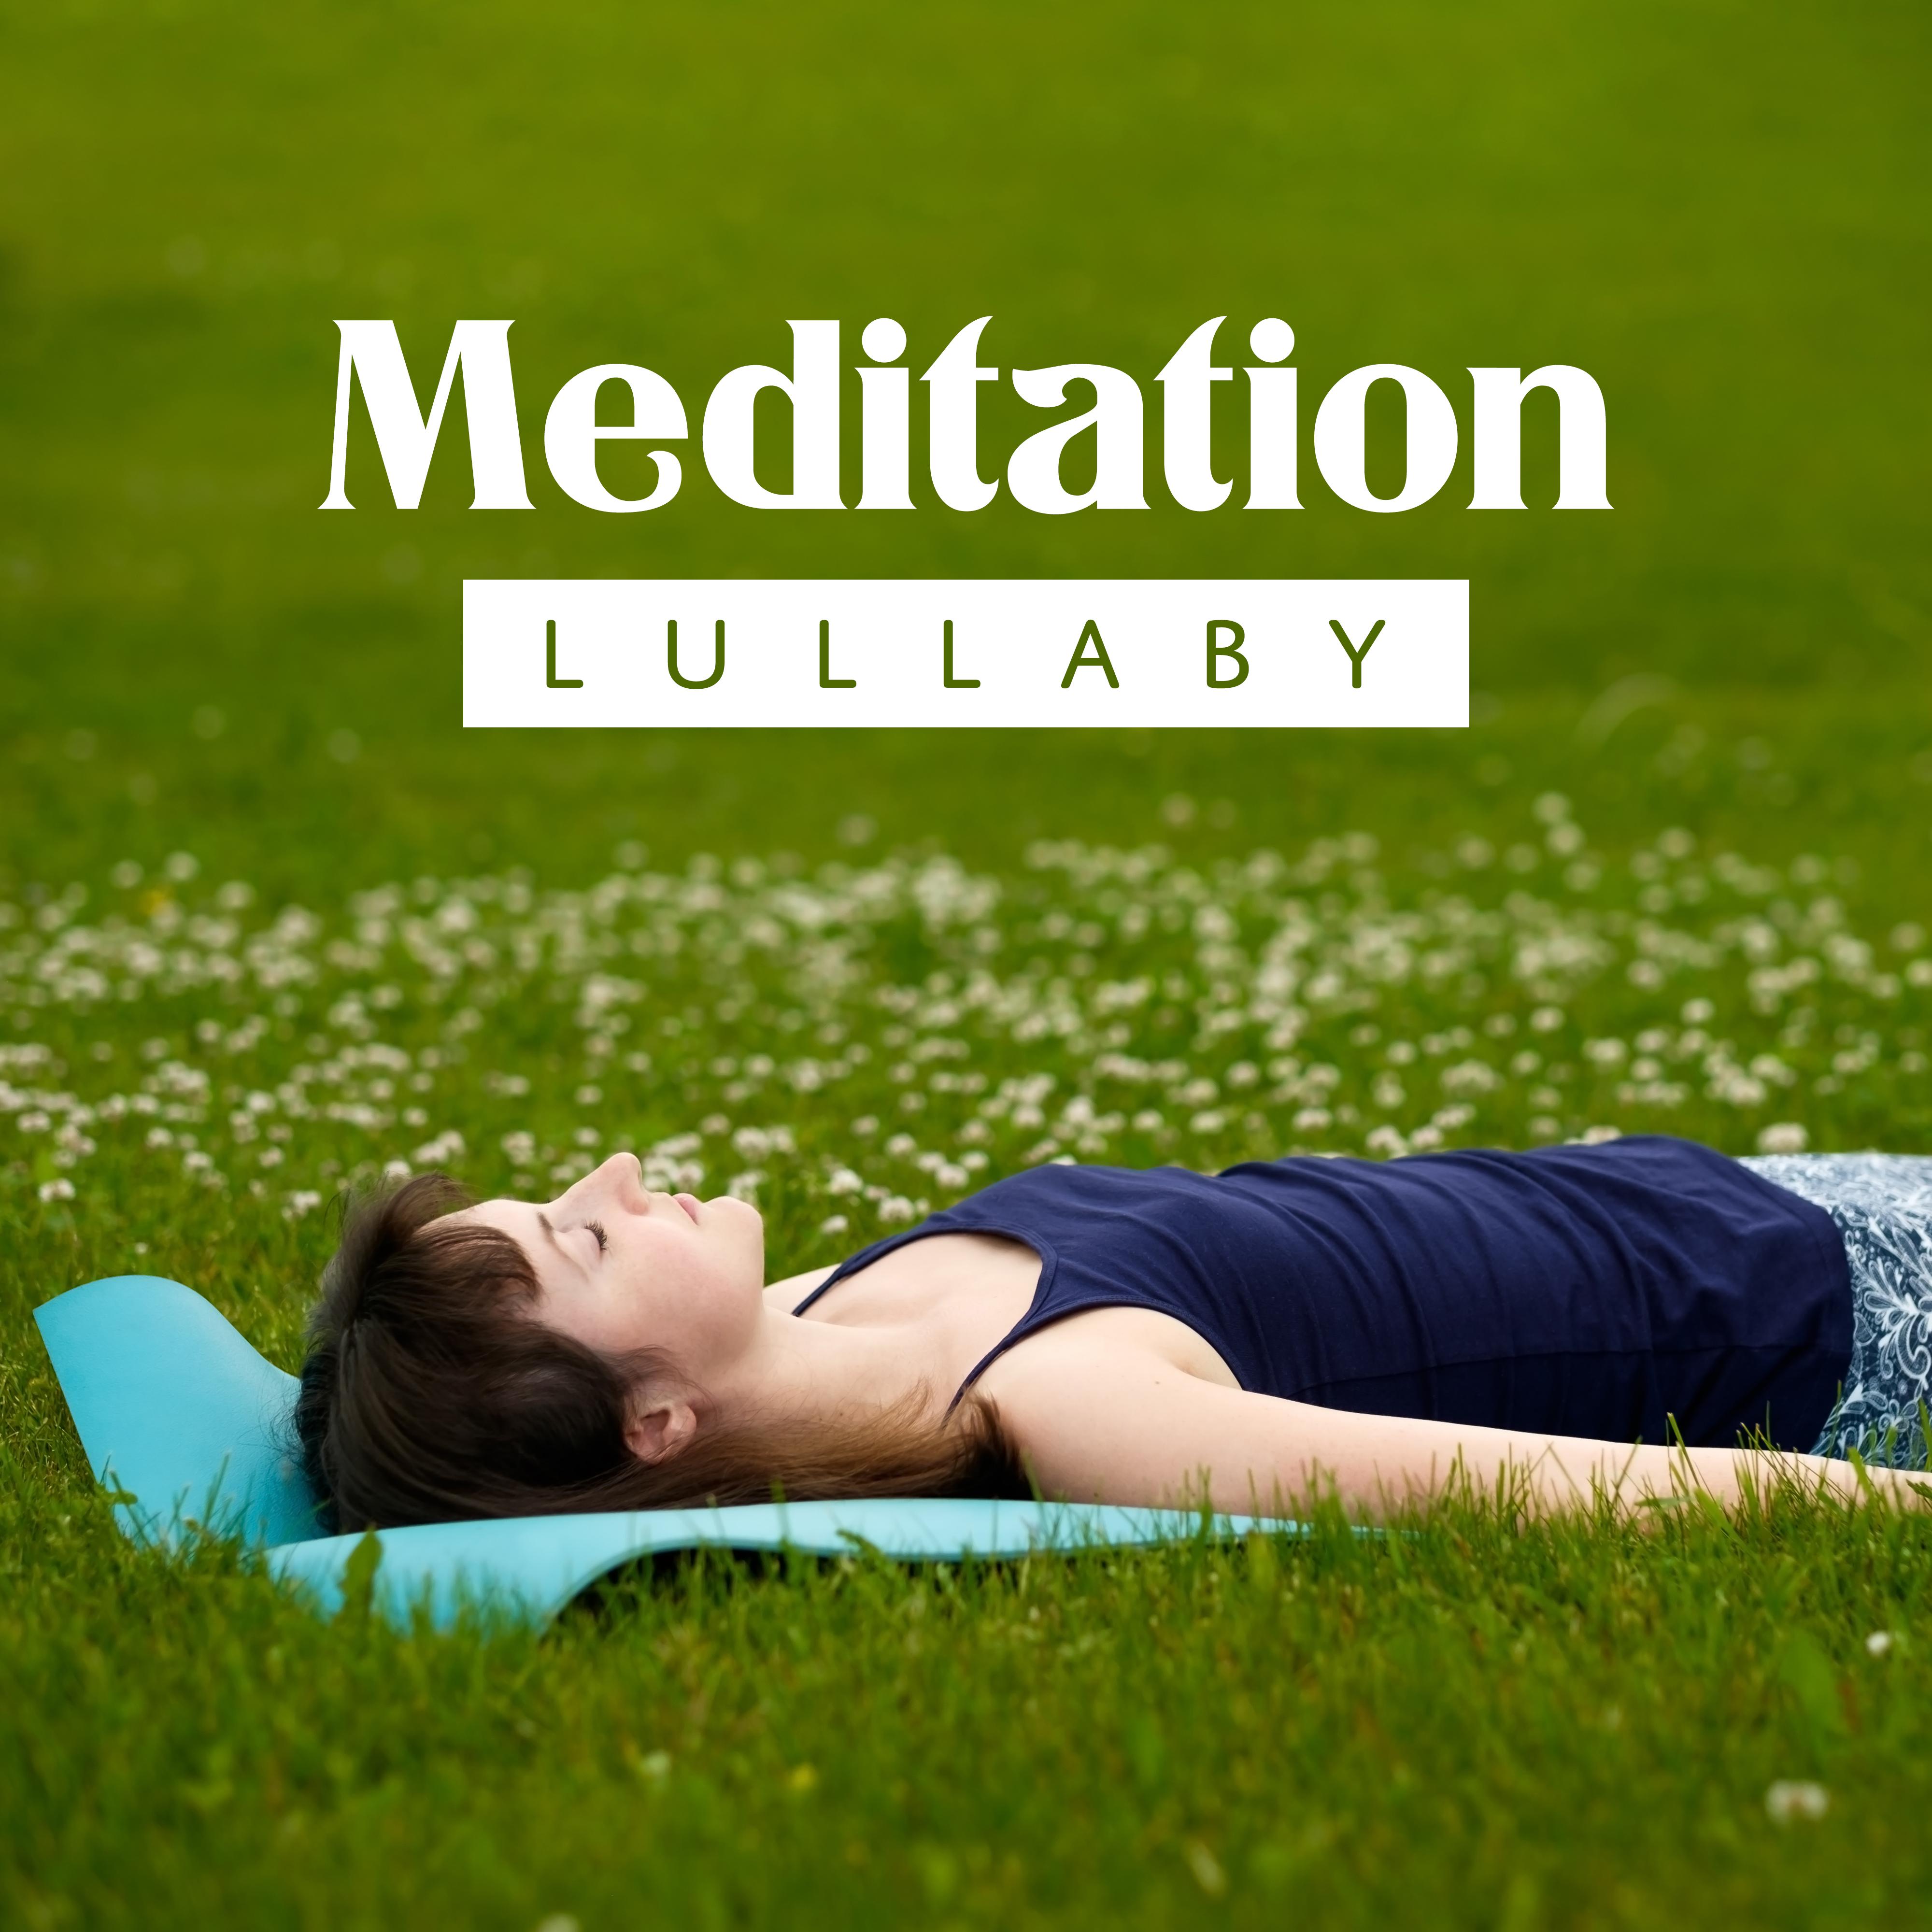 Meditation Lullaby